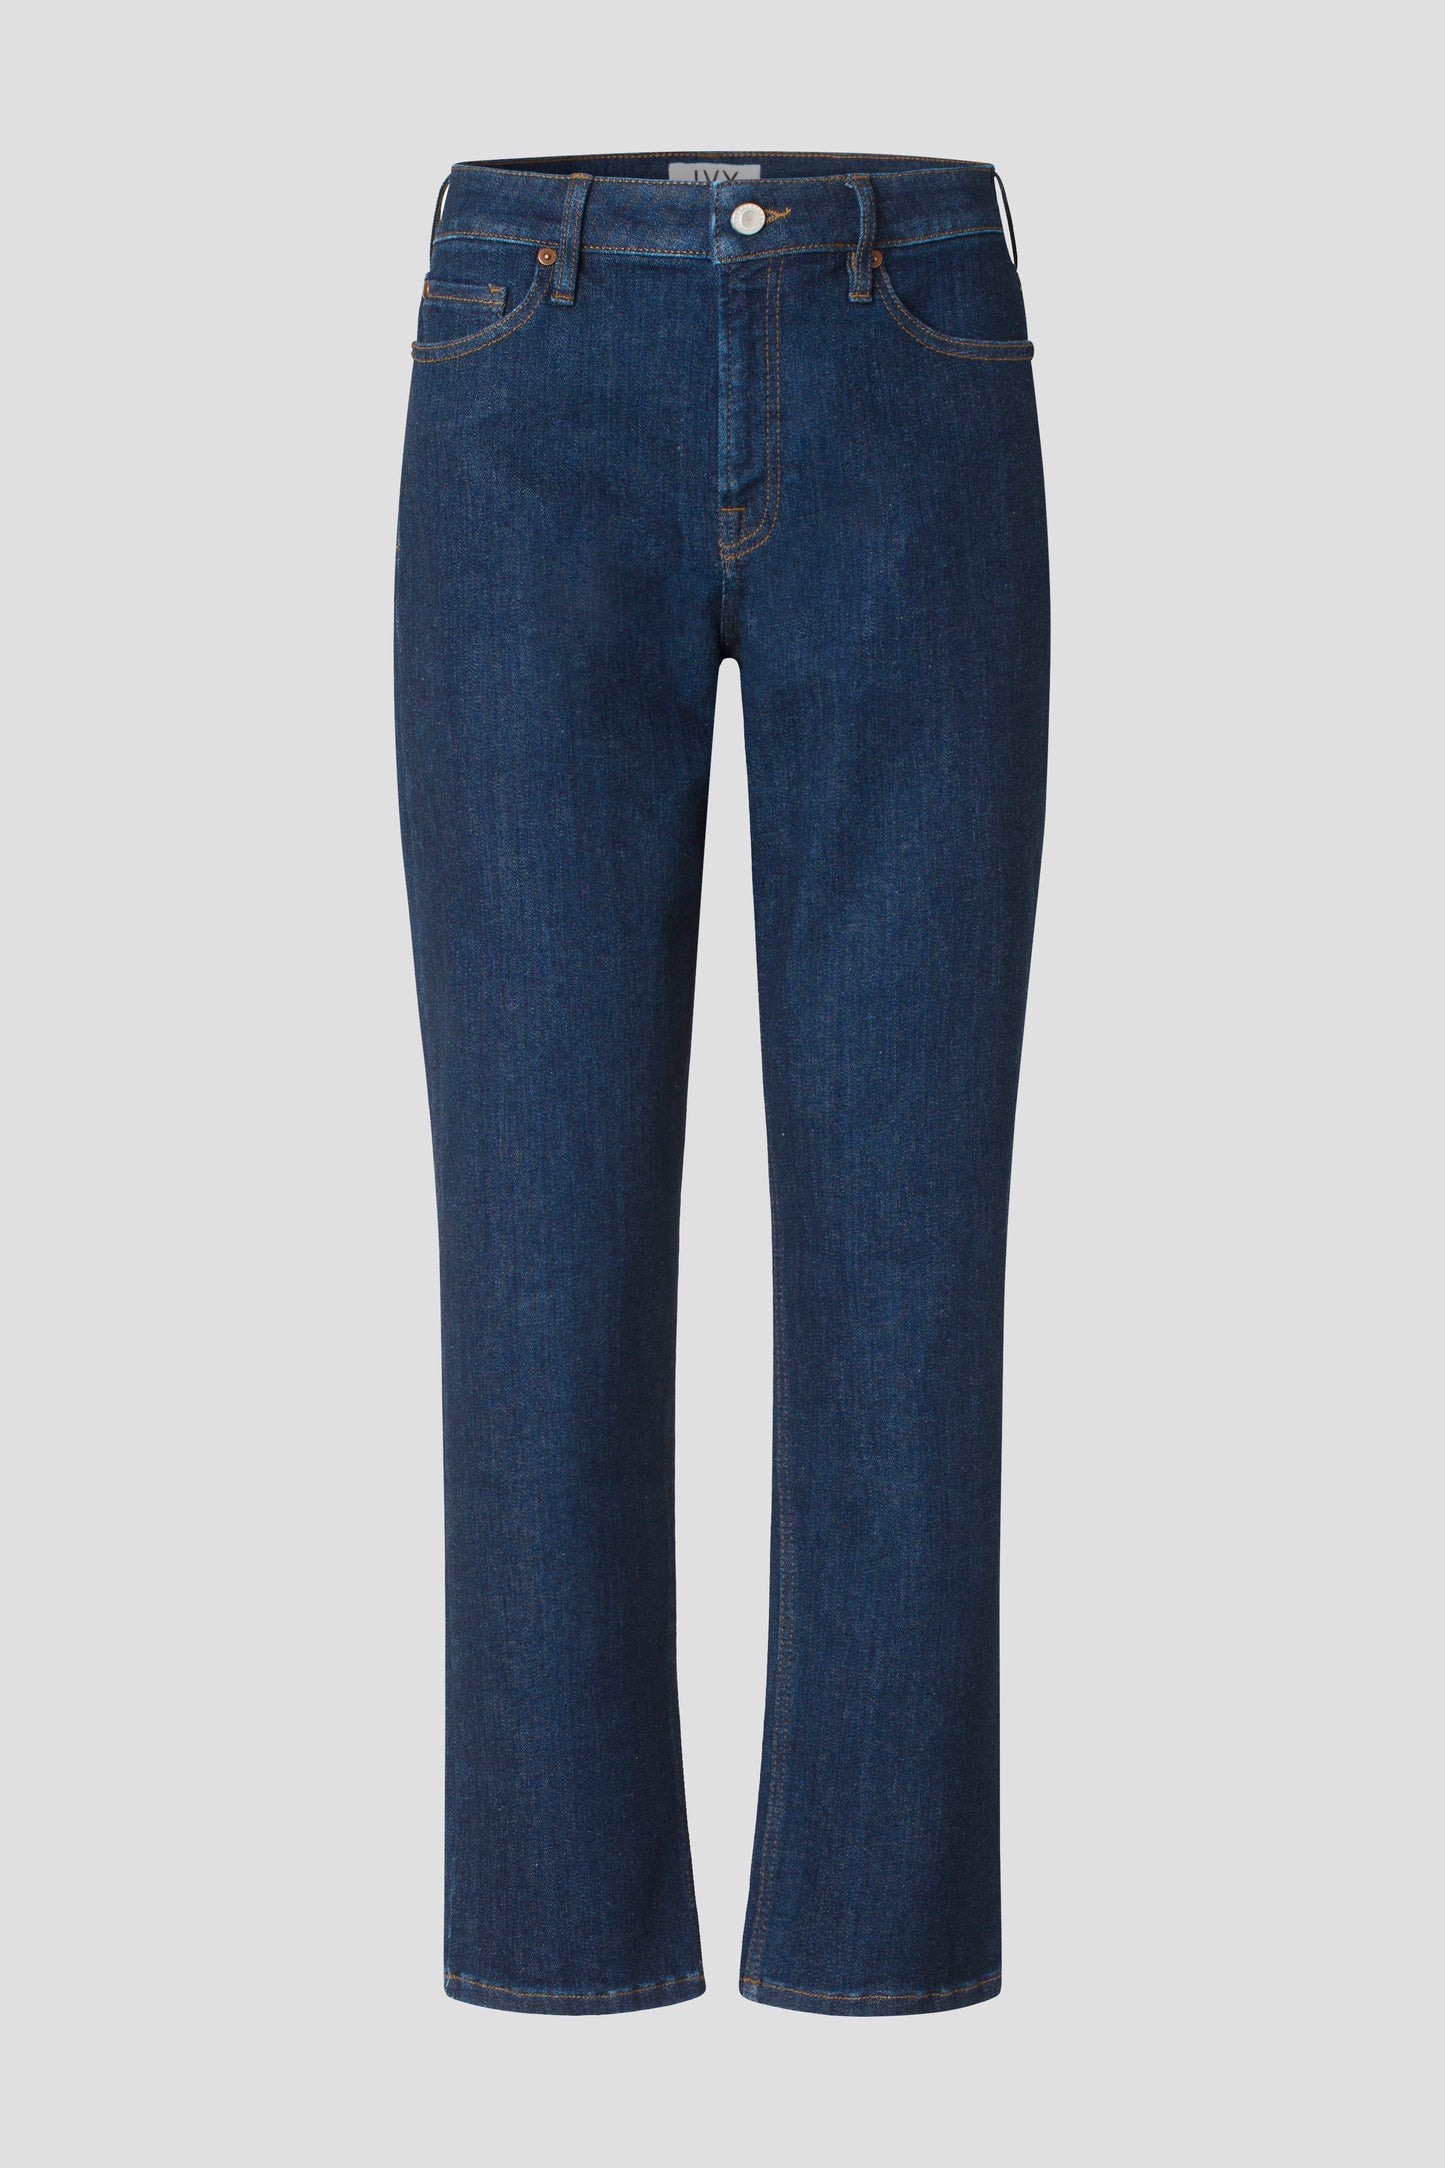 IVY Copenhagen IVY-Tonya Jeans Wash Super Original Denim Rinse Jeans & Pants 51 Denim Blue